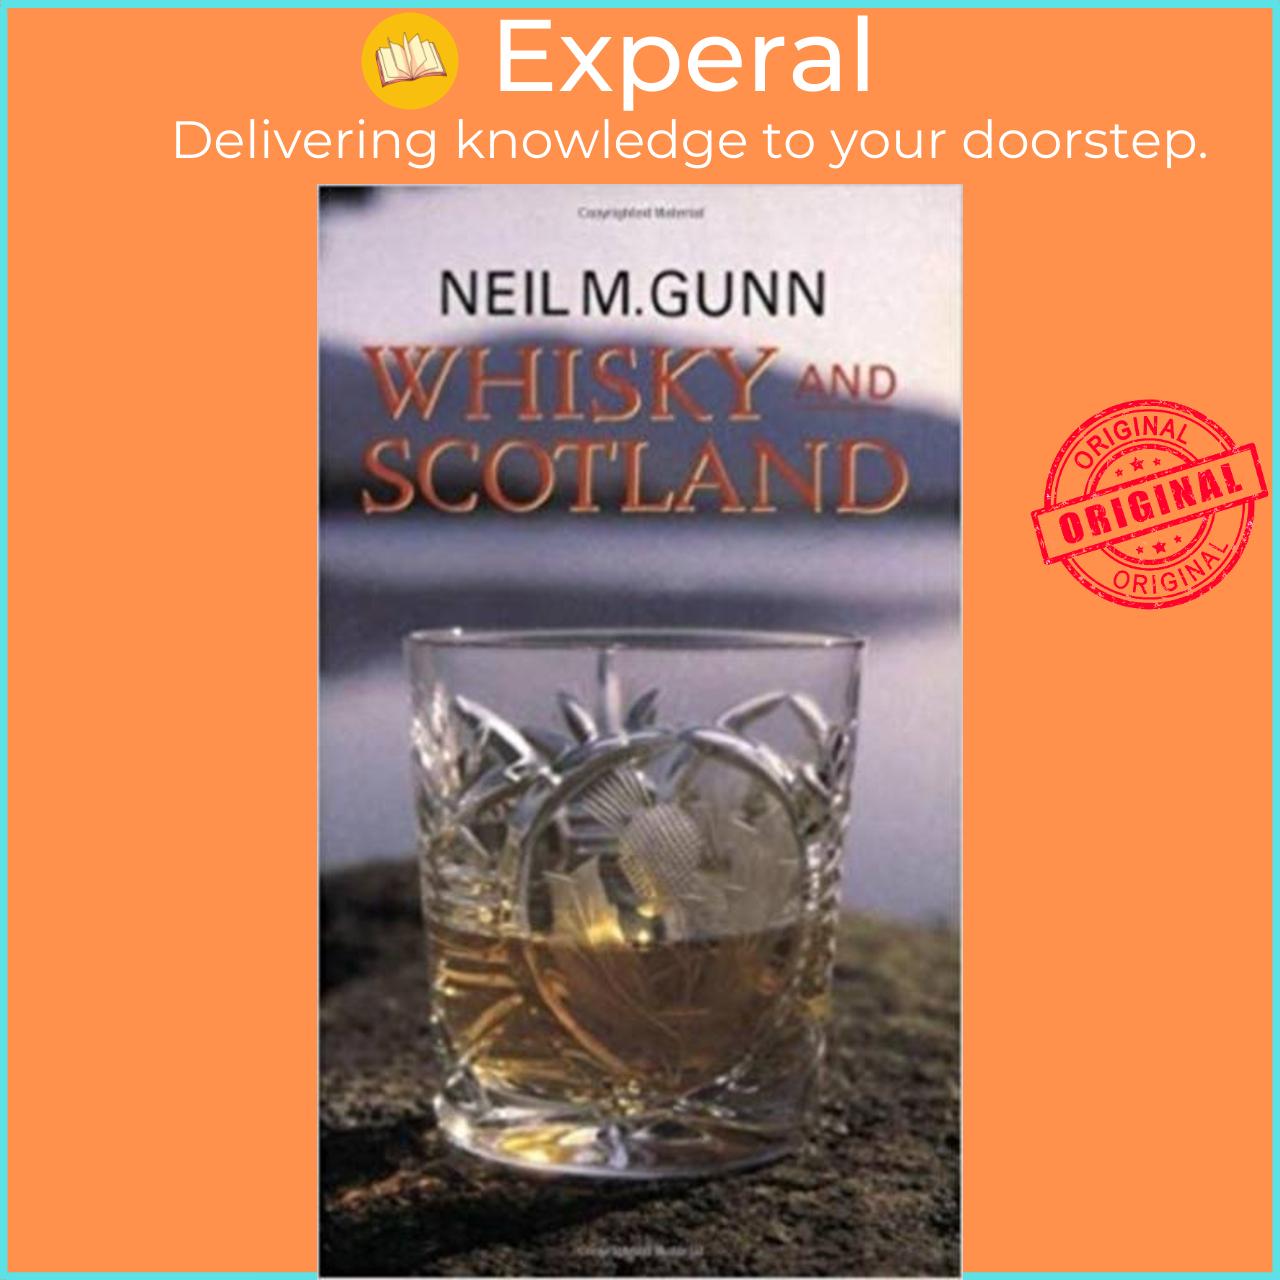 Sách - Whisky and Scotland by Neil M. Gunn (UK edition, paperback)